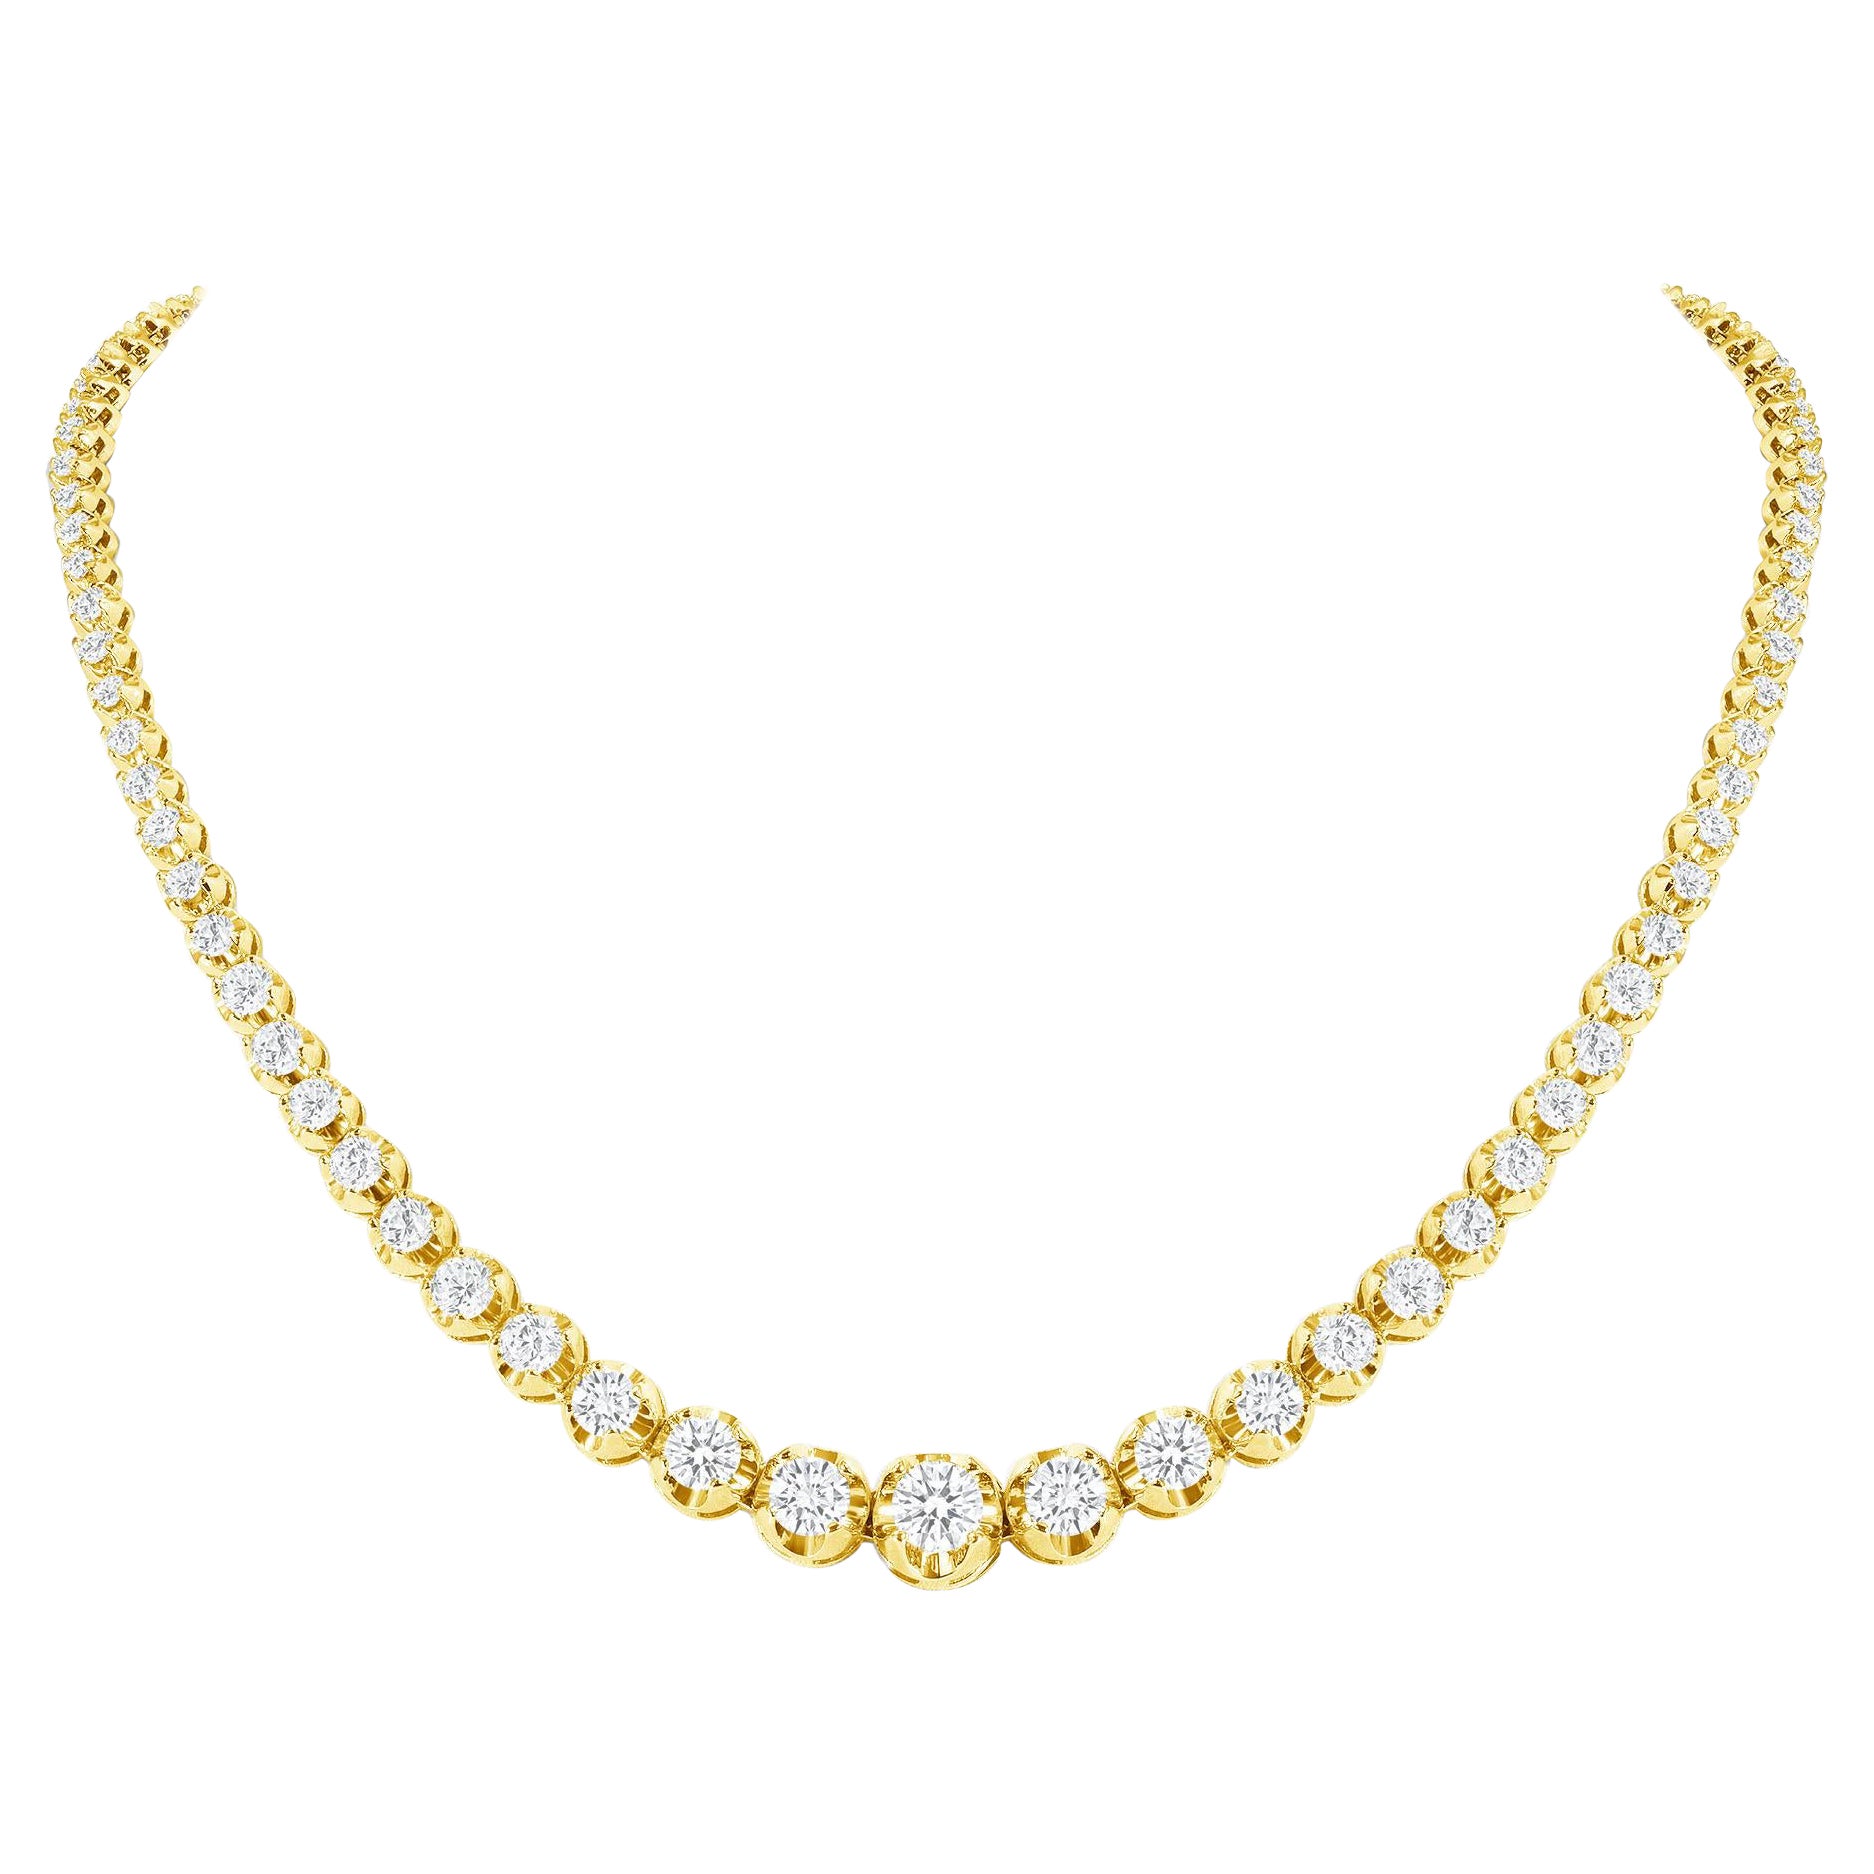 14k Gold Diamond Graduated Necklace, Natural Diamond Necklace